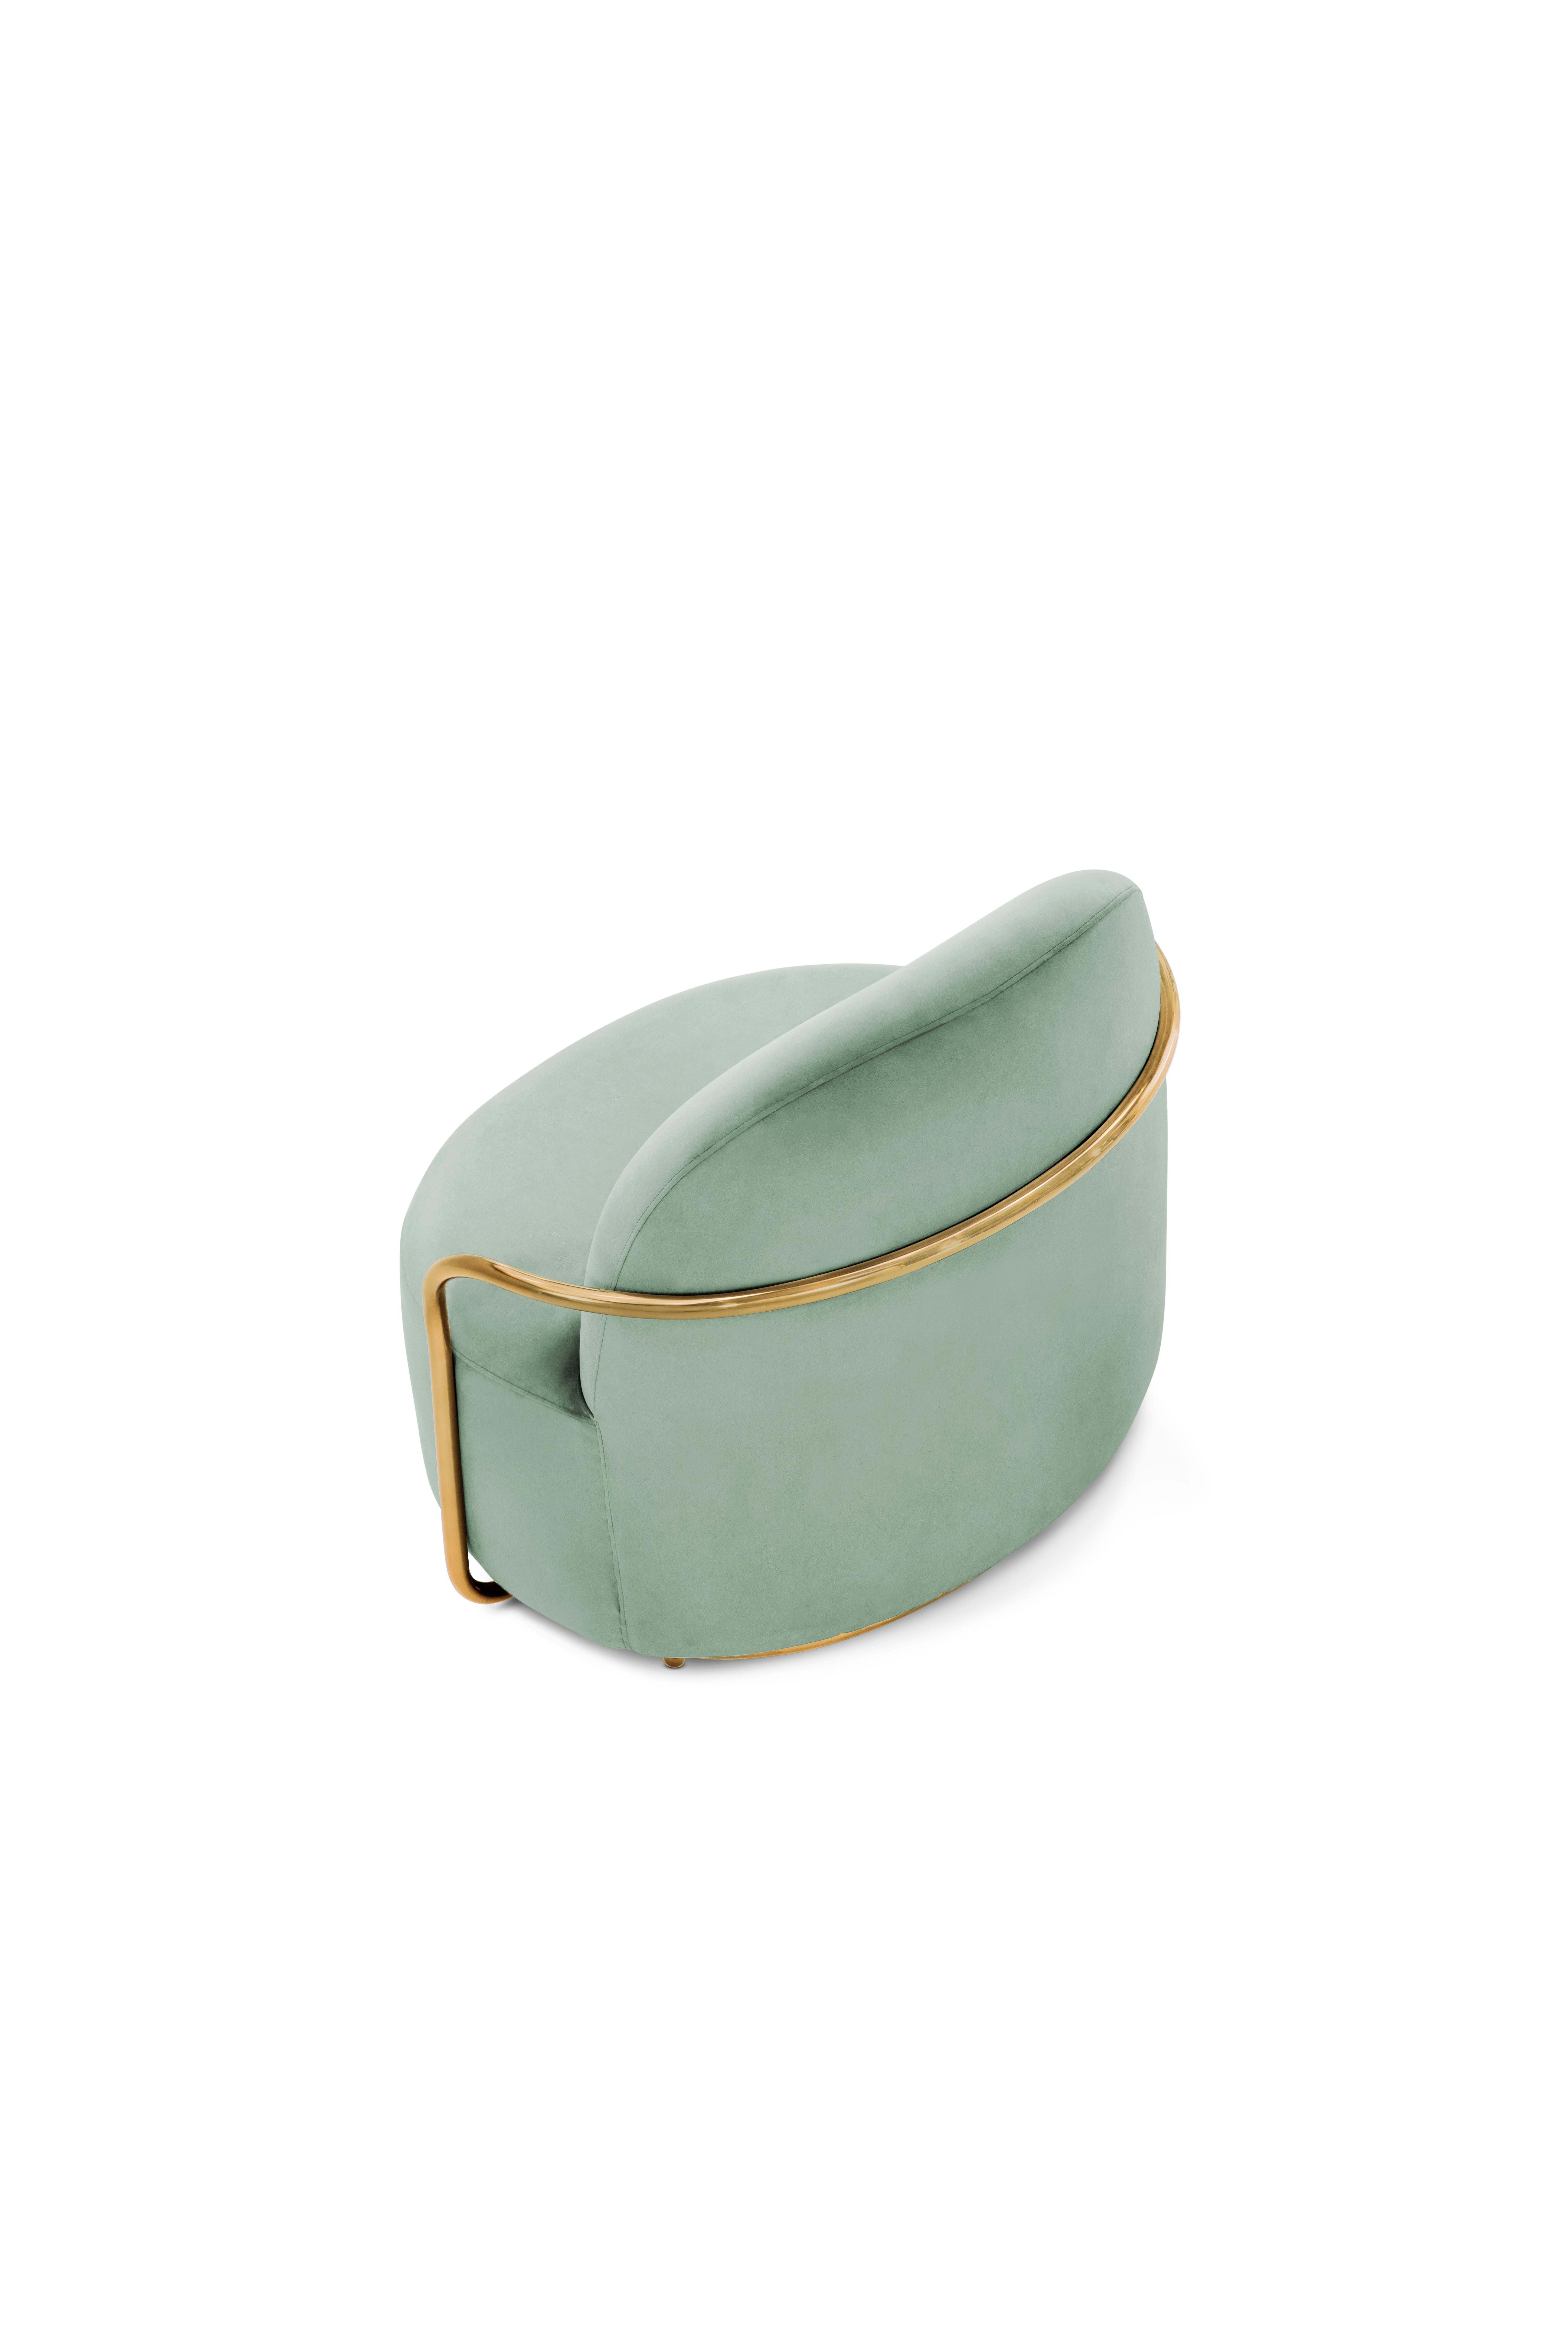 mint green lounge chair